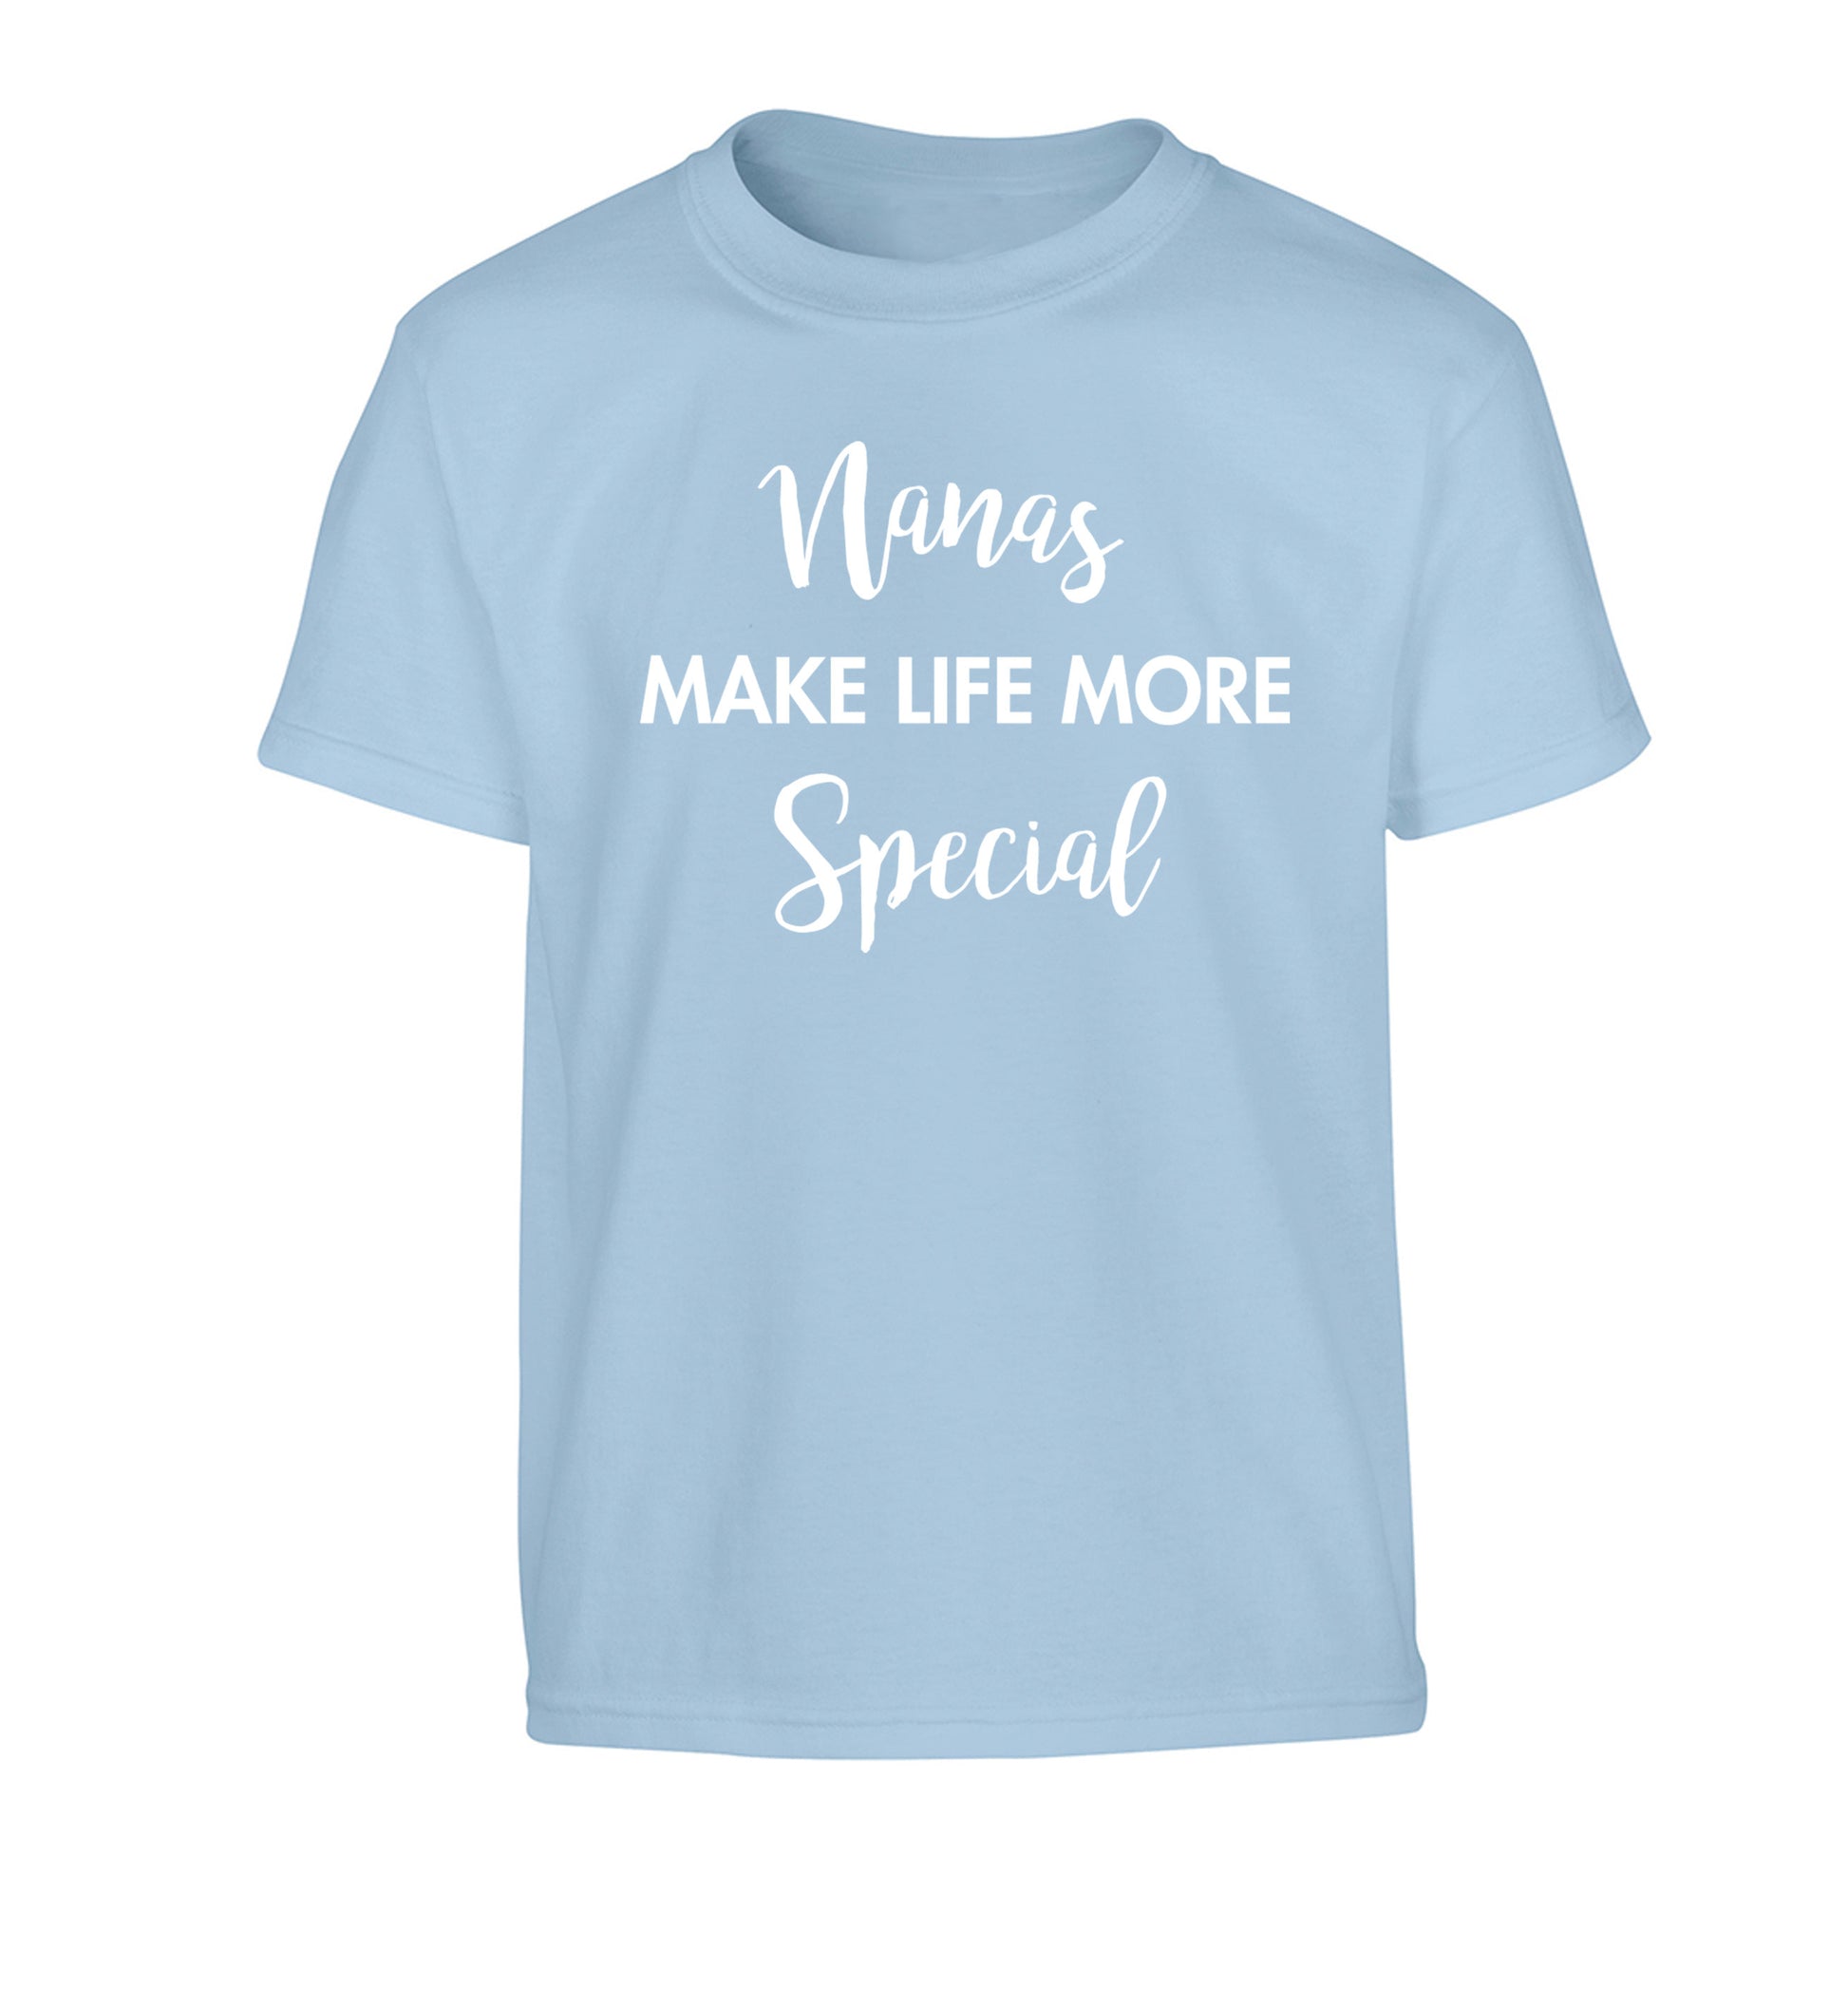 Nanas make life more special Children's light blue Tshirt 12-14 Years